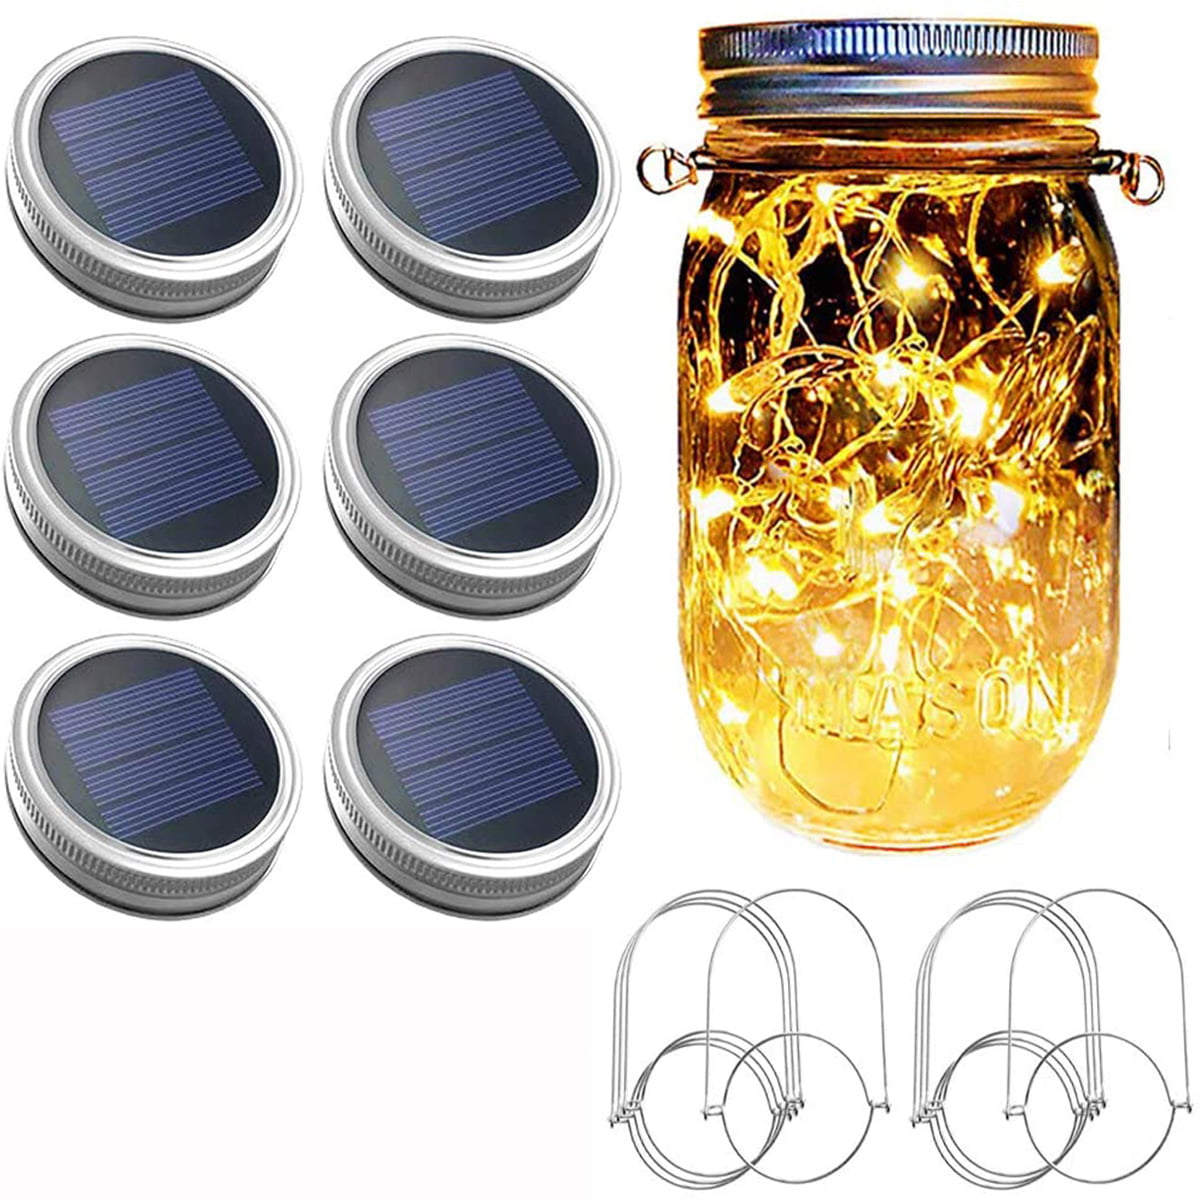 Set of 5 SOLAR Powered Mason Jar Lid Lights Canning Fruit Ball Jar Rustic Lamp 